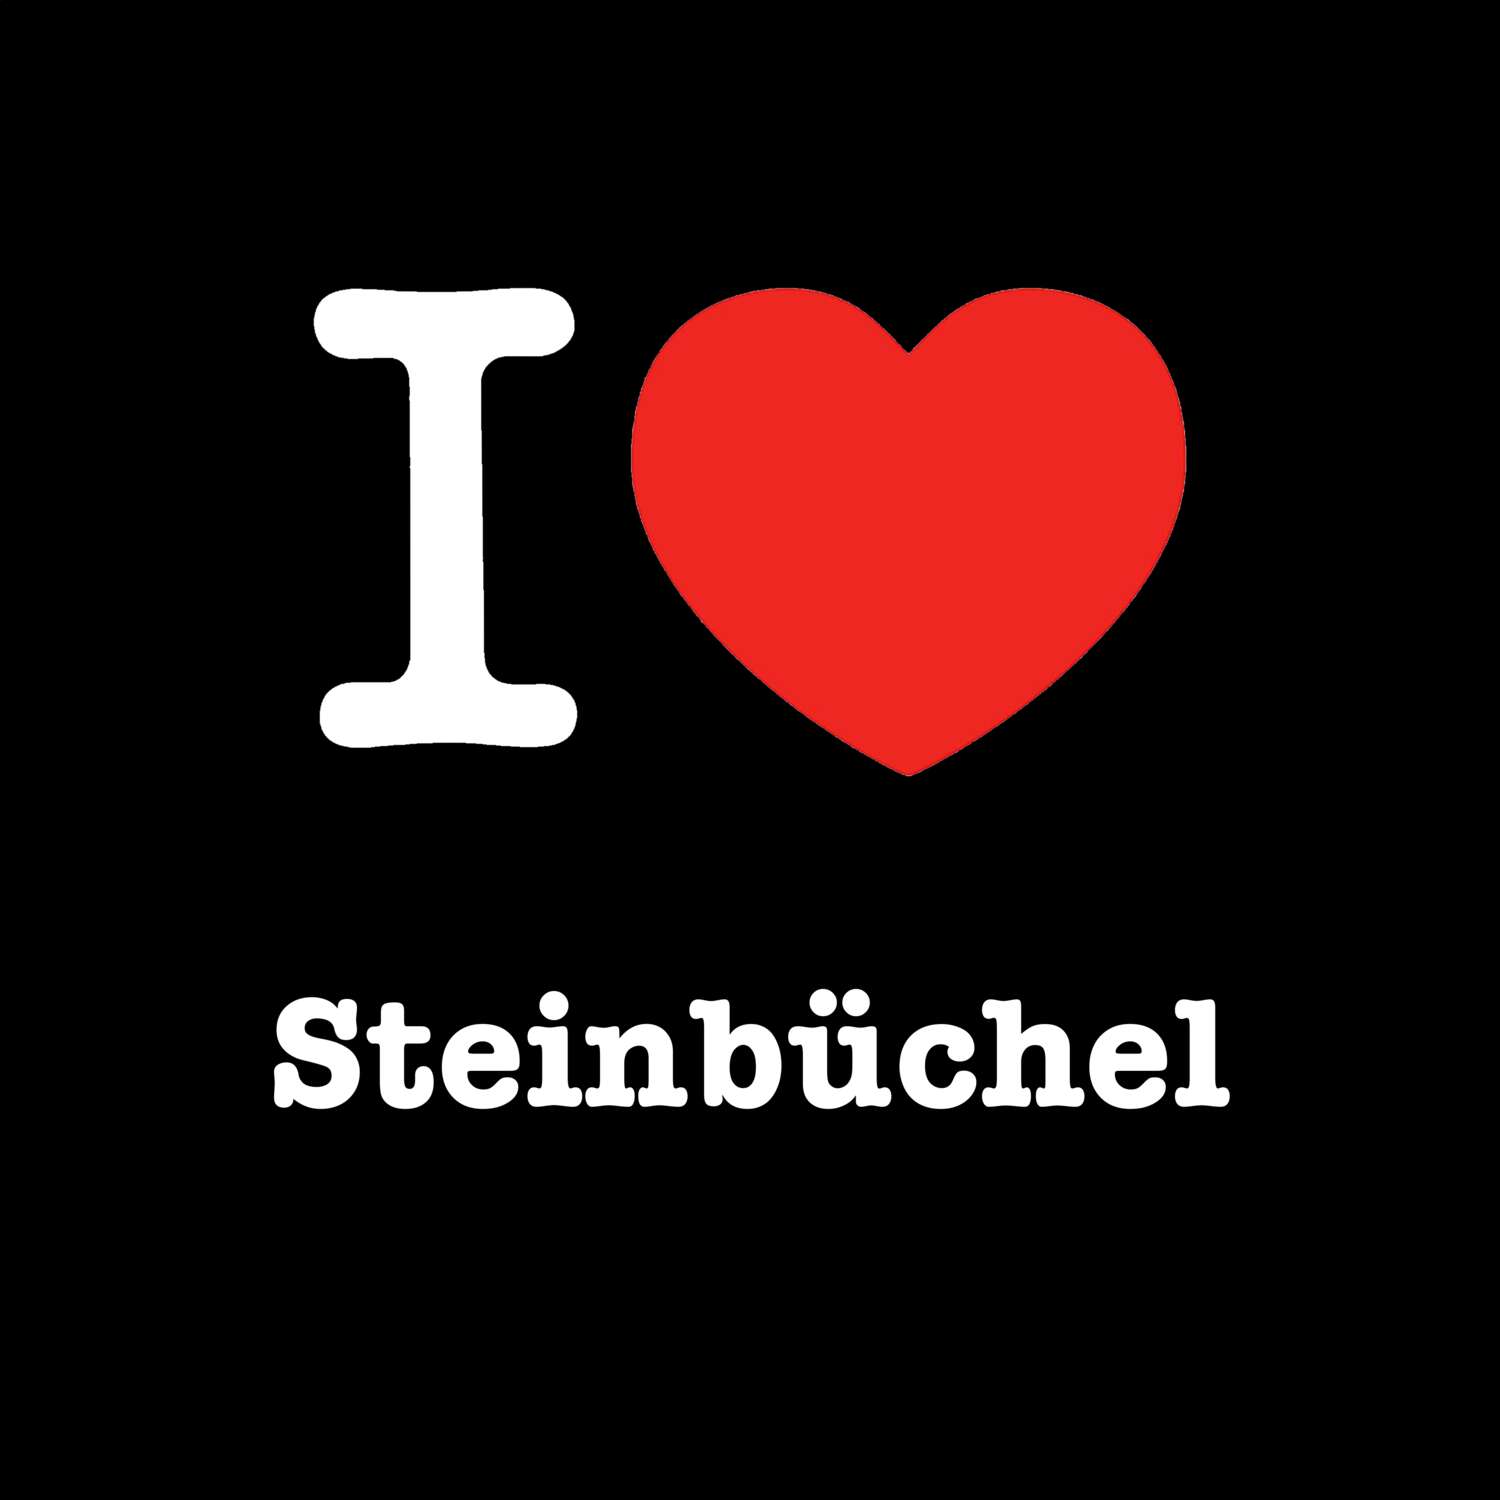 Steinbüchel T-Shirt »I love«